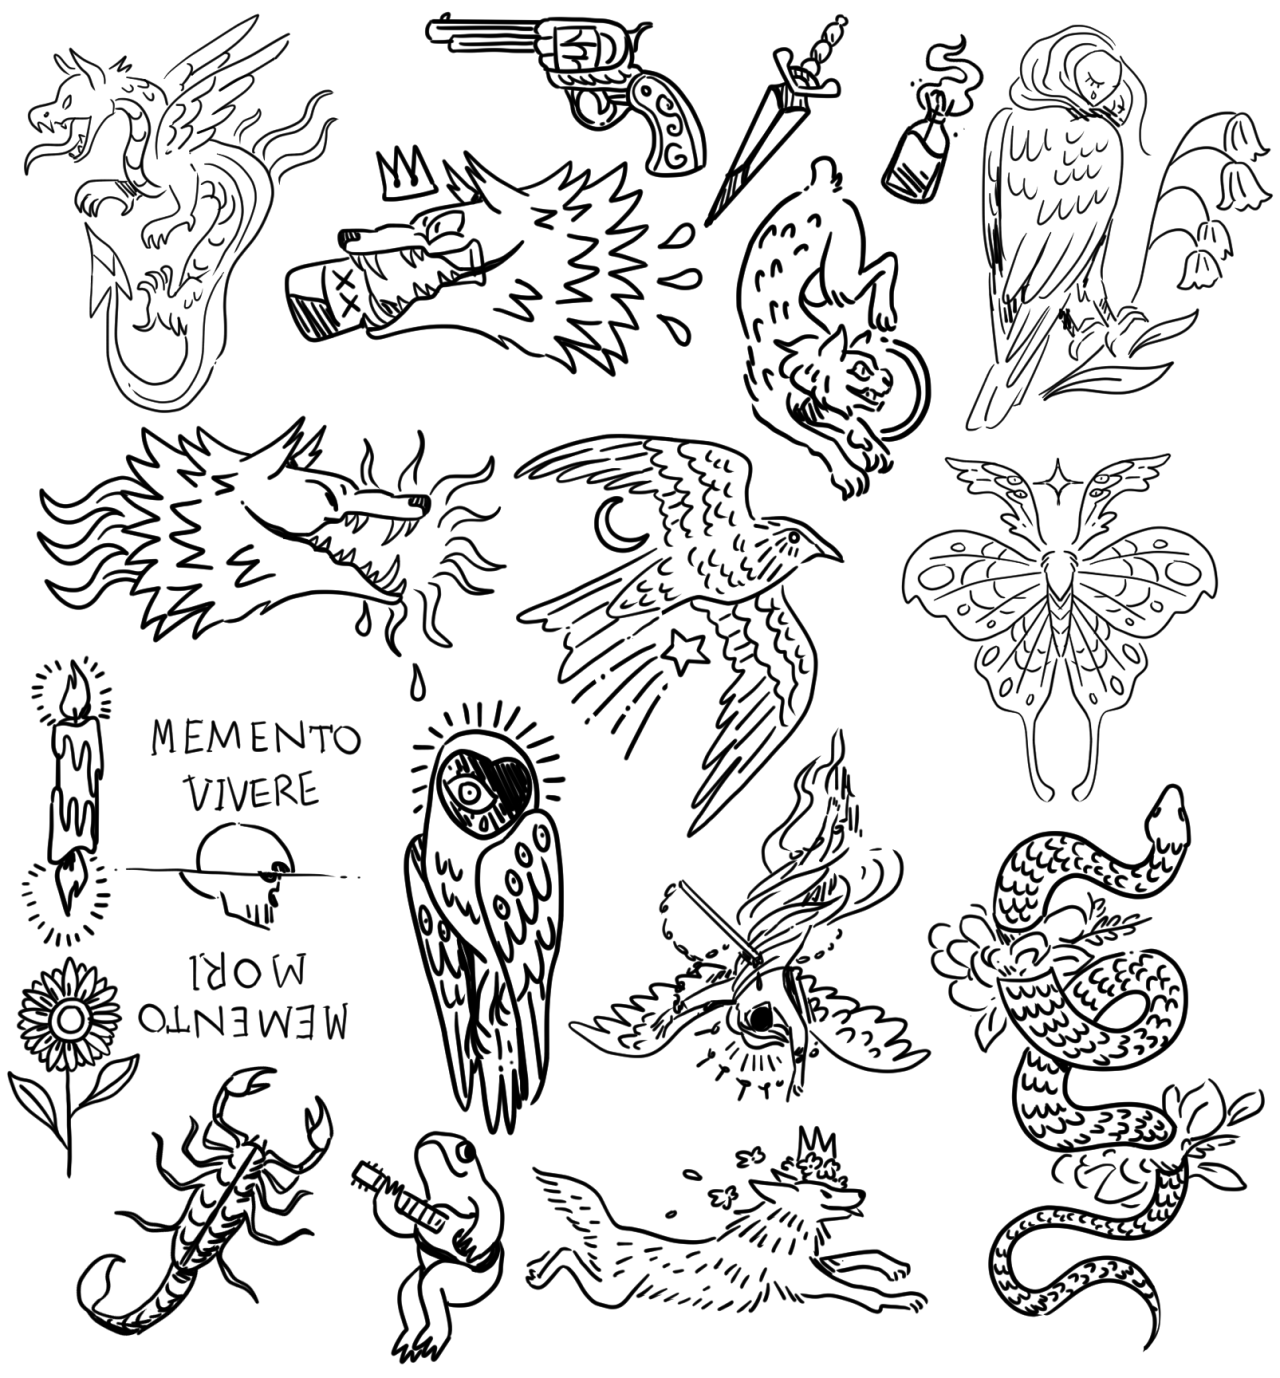 28400 Matching Tattoos Illustrations RoyaltyFree Vector Graphics  Clip  Art  iStock  Friends matching tattoos